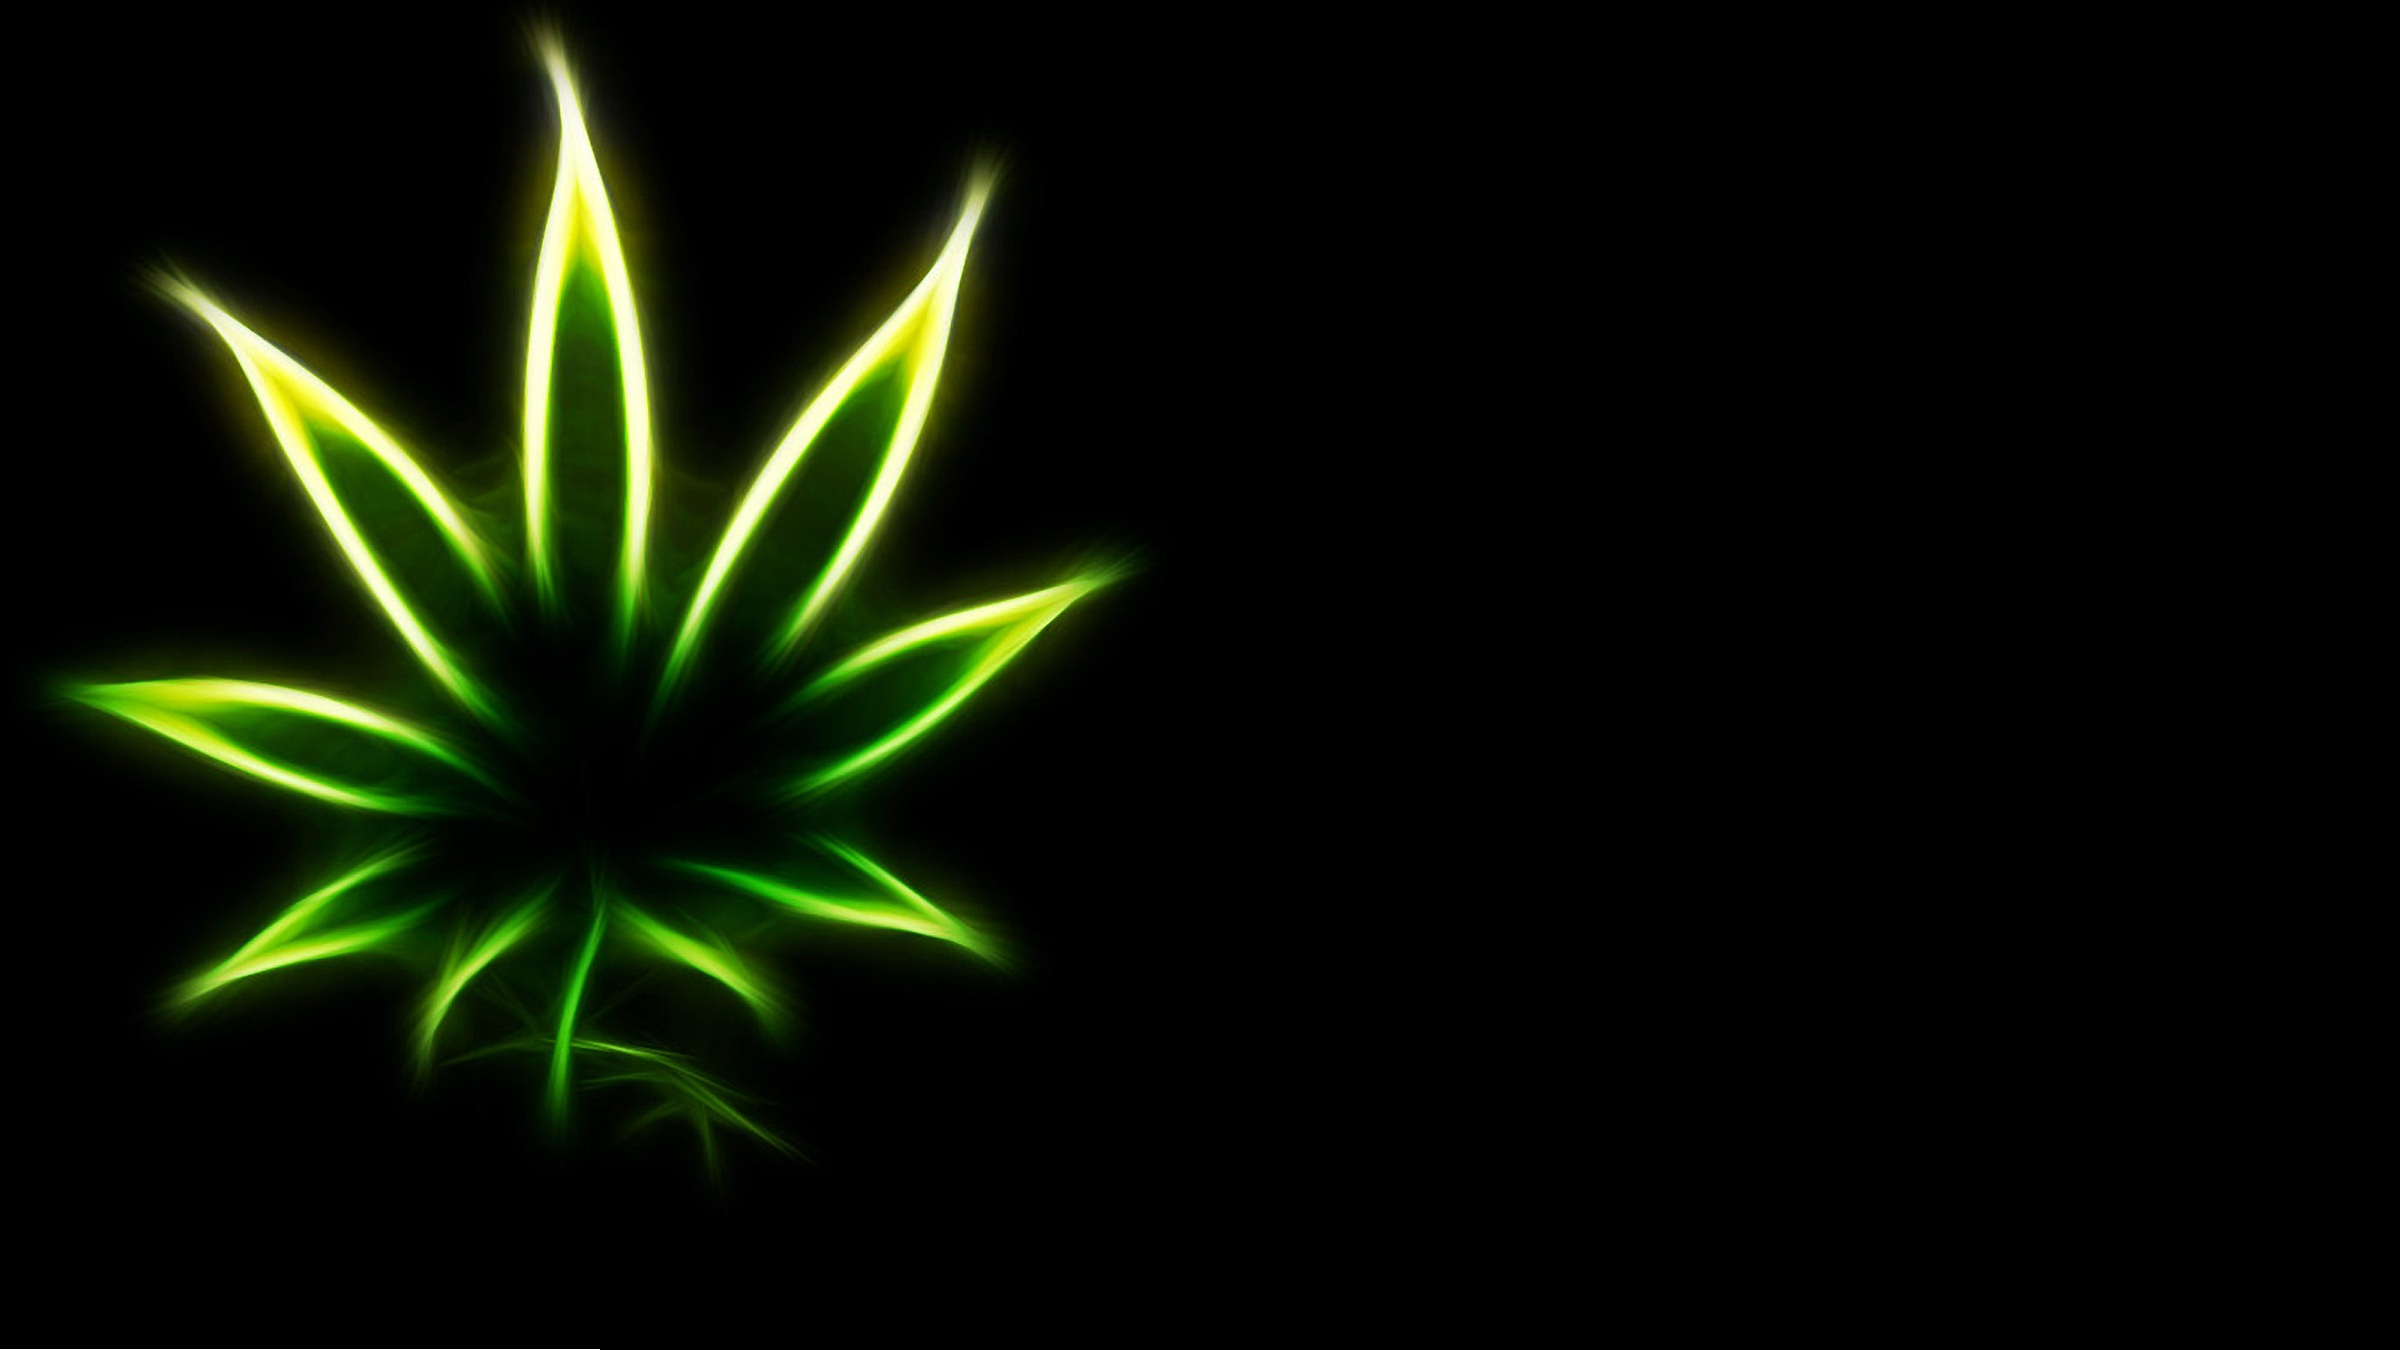 Desktop Wallpaper on Drugs Marijuana Weed Cannabis Hd Wallpaper   General   766743